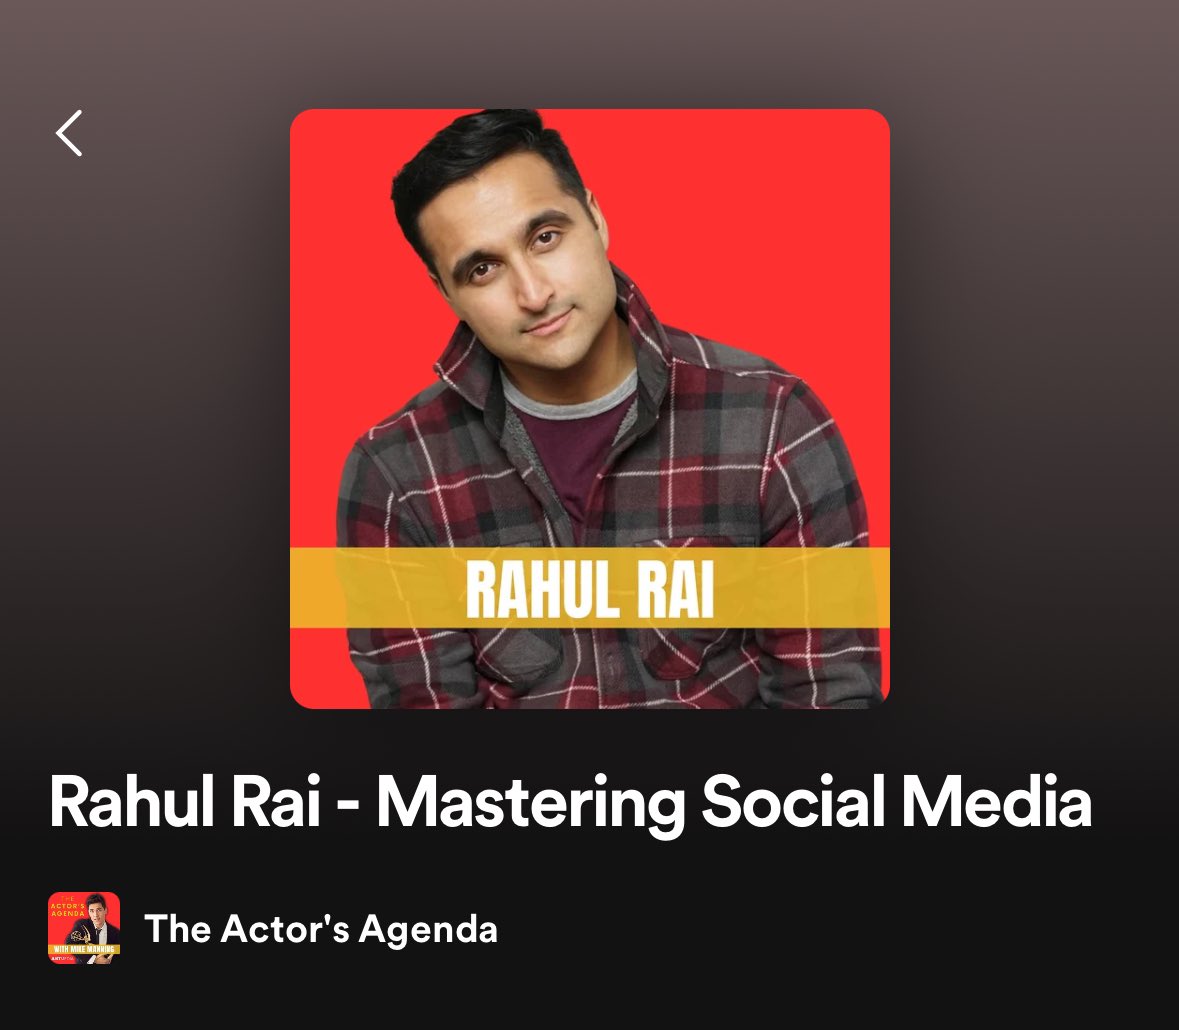 Wanna learn how actor/influencer Rahul Rai built a social media presence of +5MILLION followers on @tiktok_us and +1.5MILLION on @instagram? Check out our latest episode here! spotifyanchor-web.app.link/e/CKEK7U7sSIb #theactorsagenda #podcast #rahulrai #mikemanning #socialmedia #tips